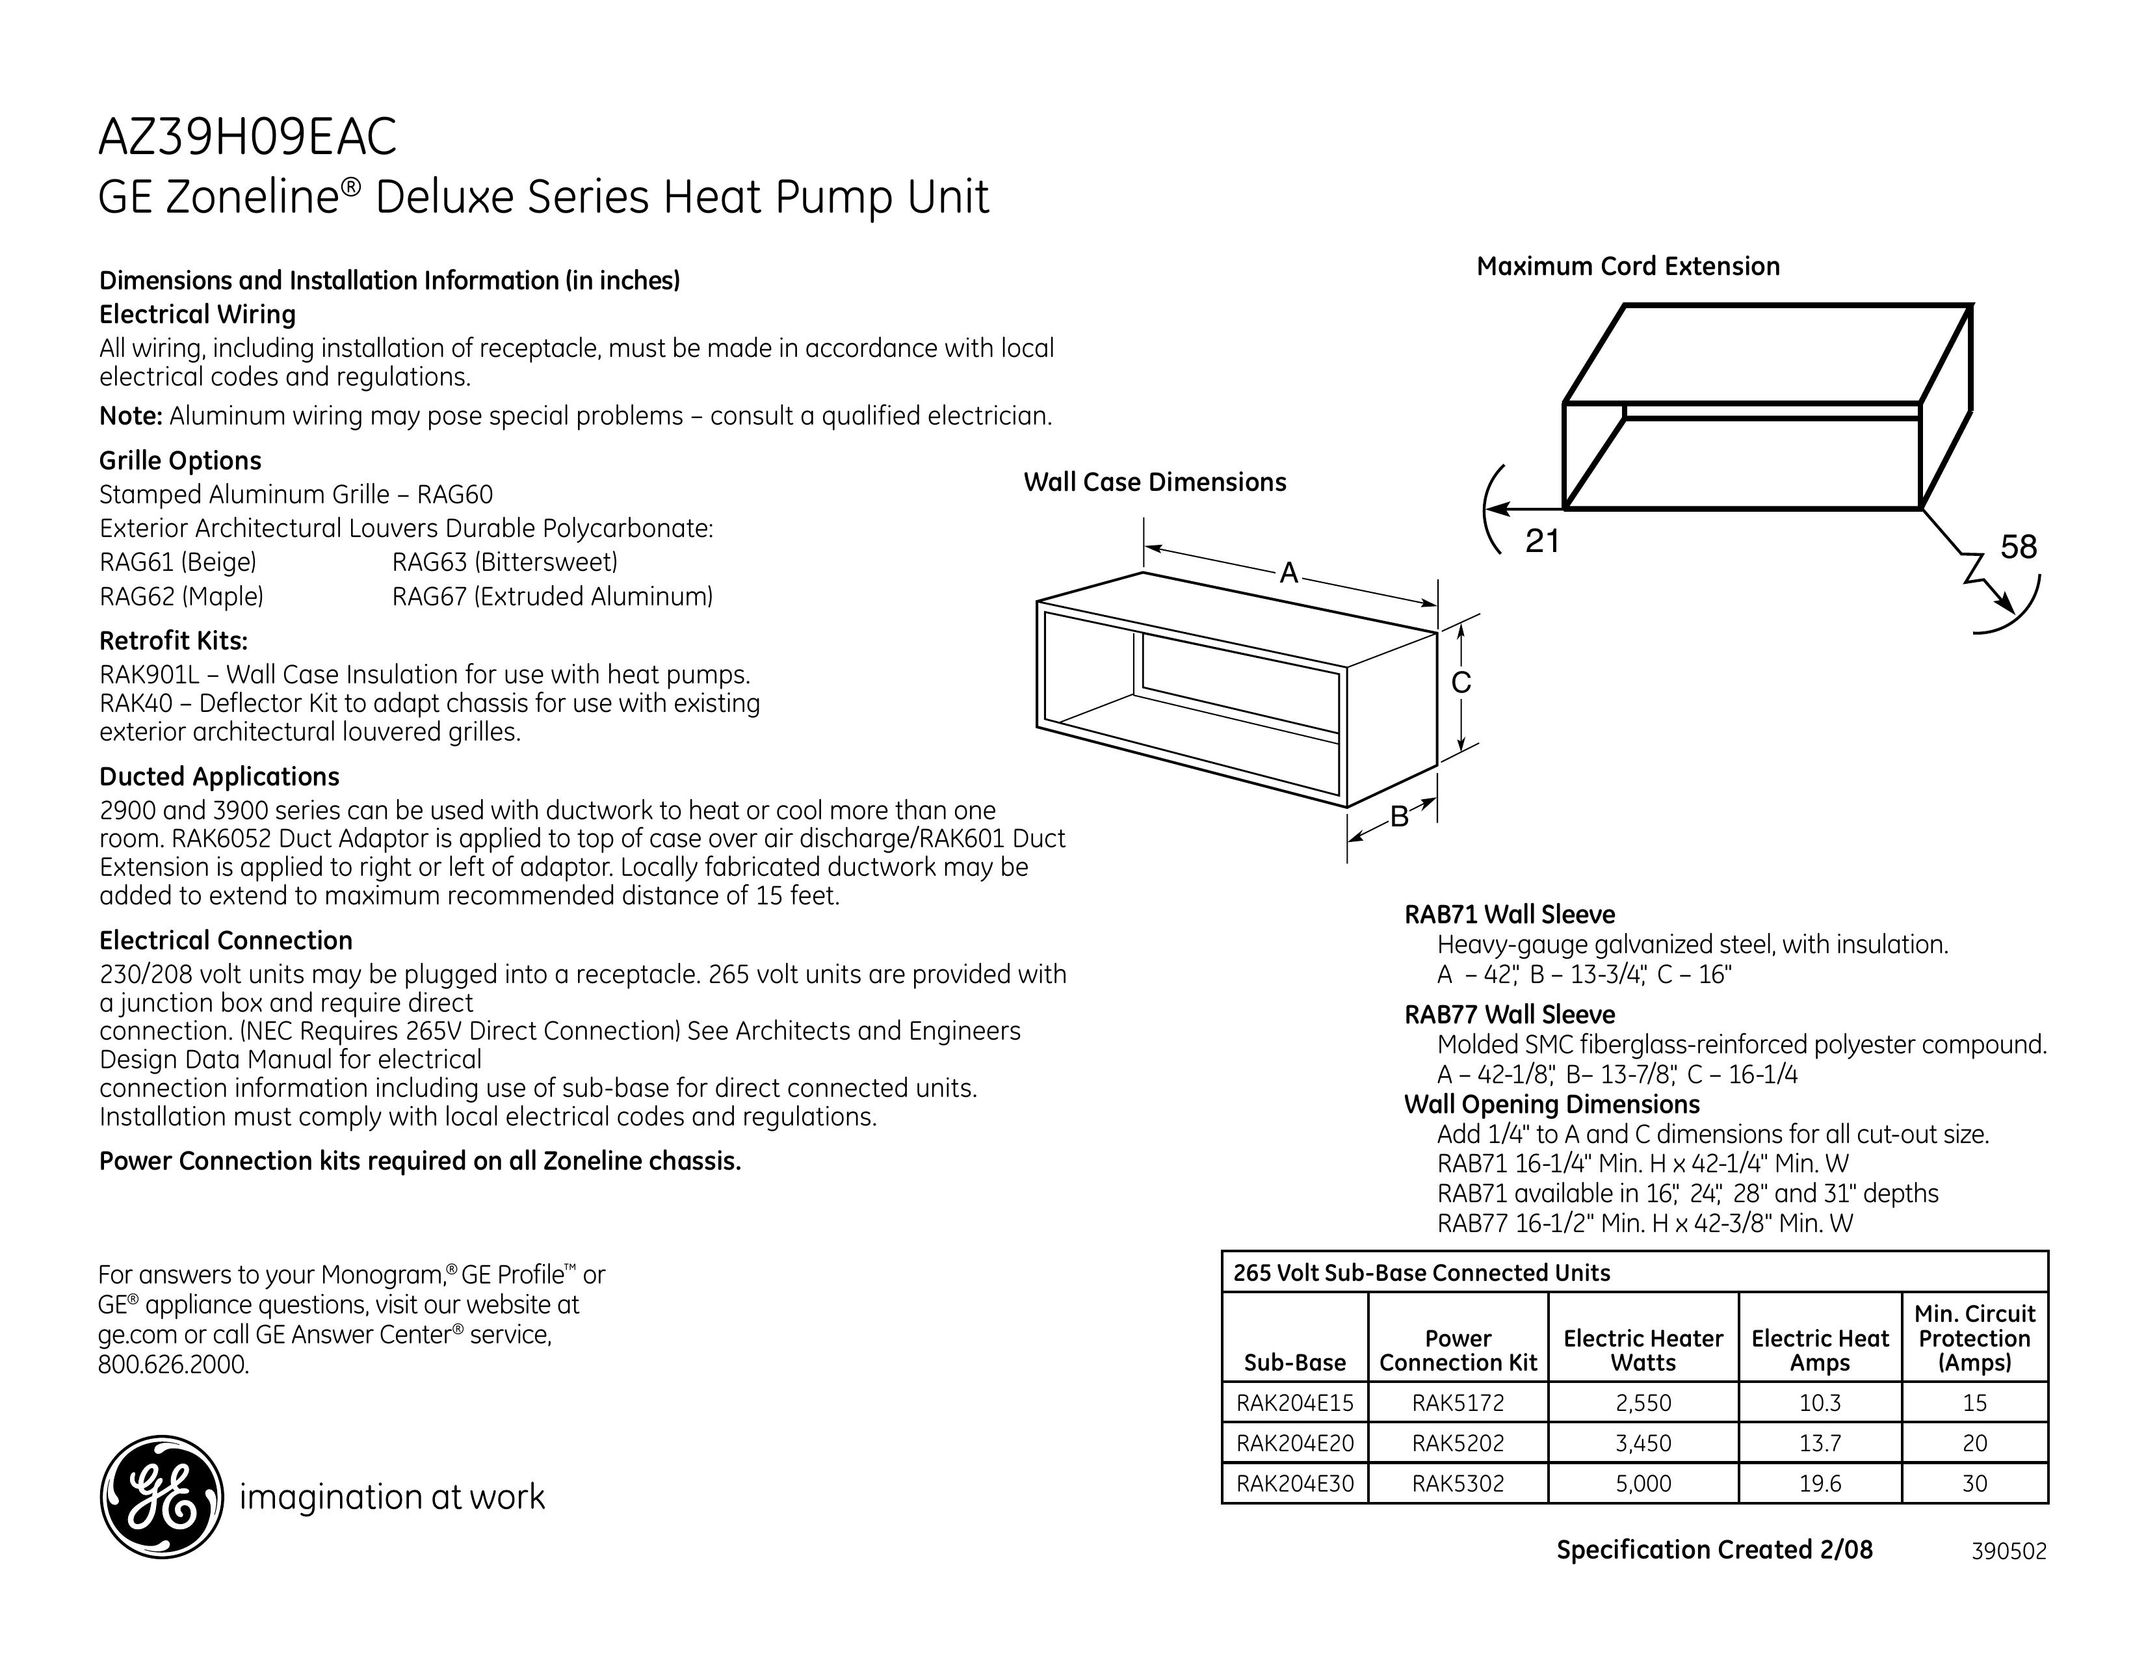 GE AZ39H09EAC Heat Pump User Manual